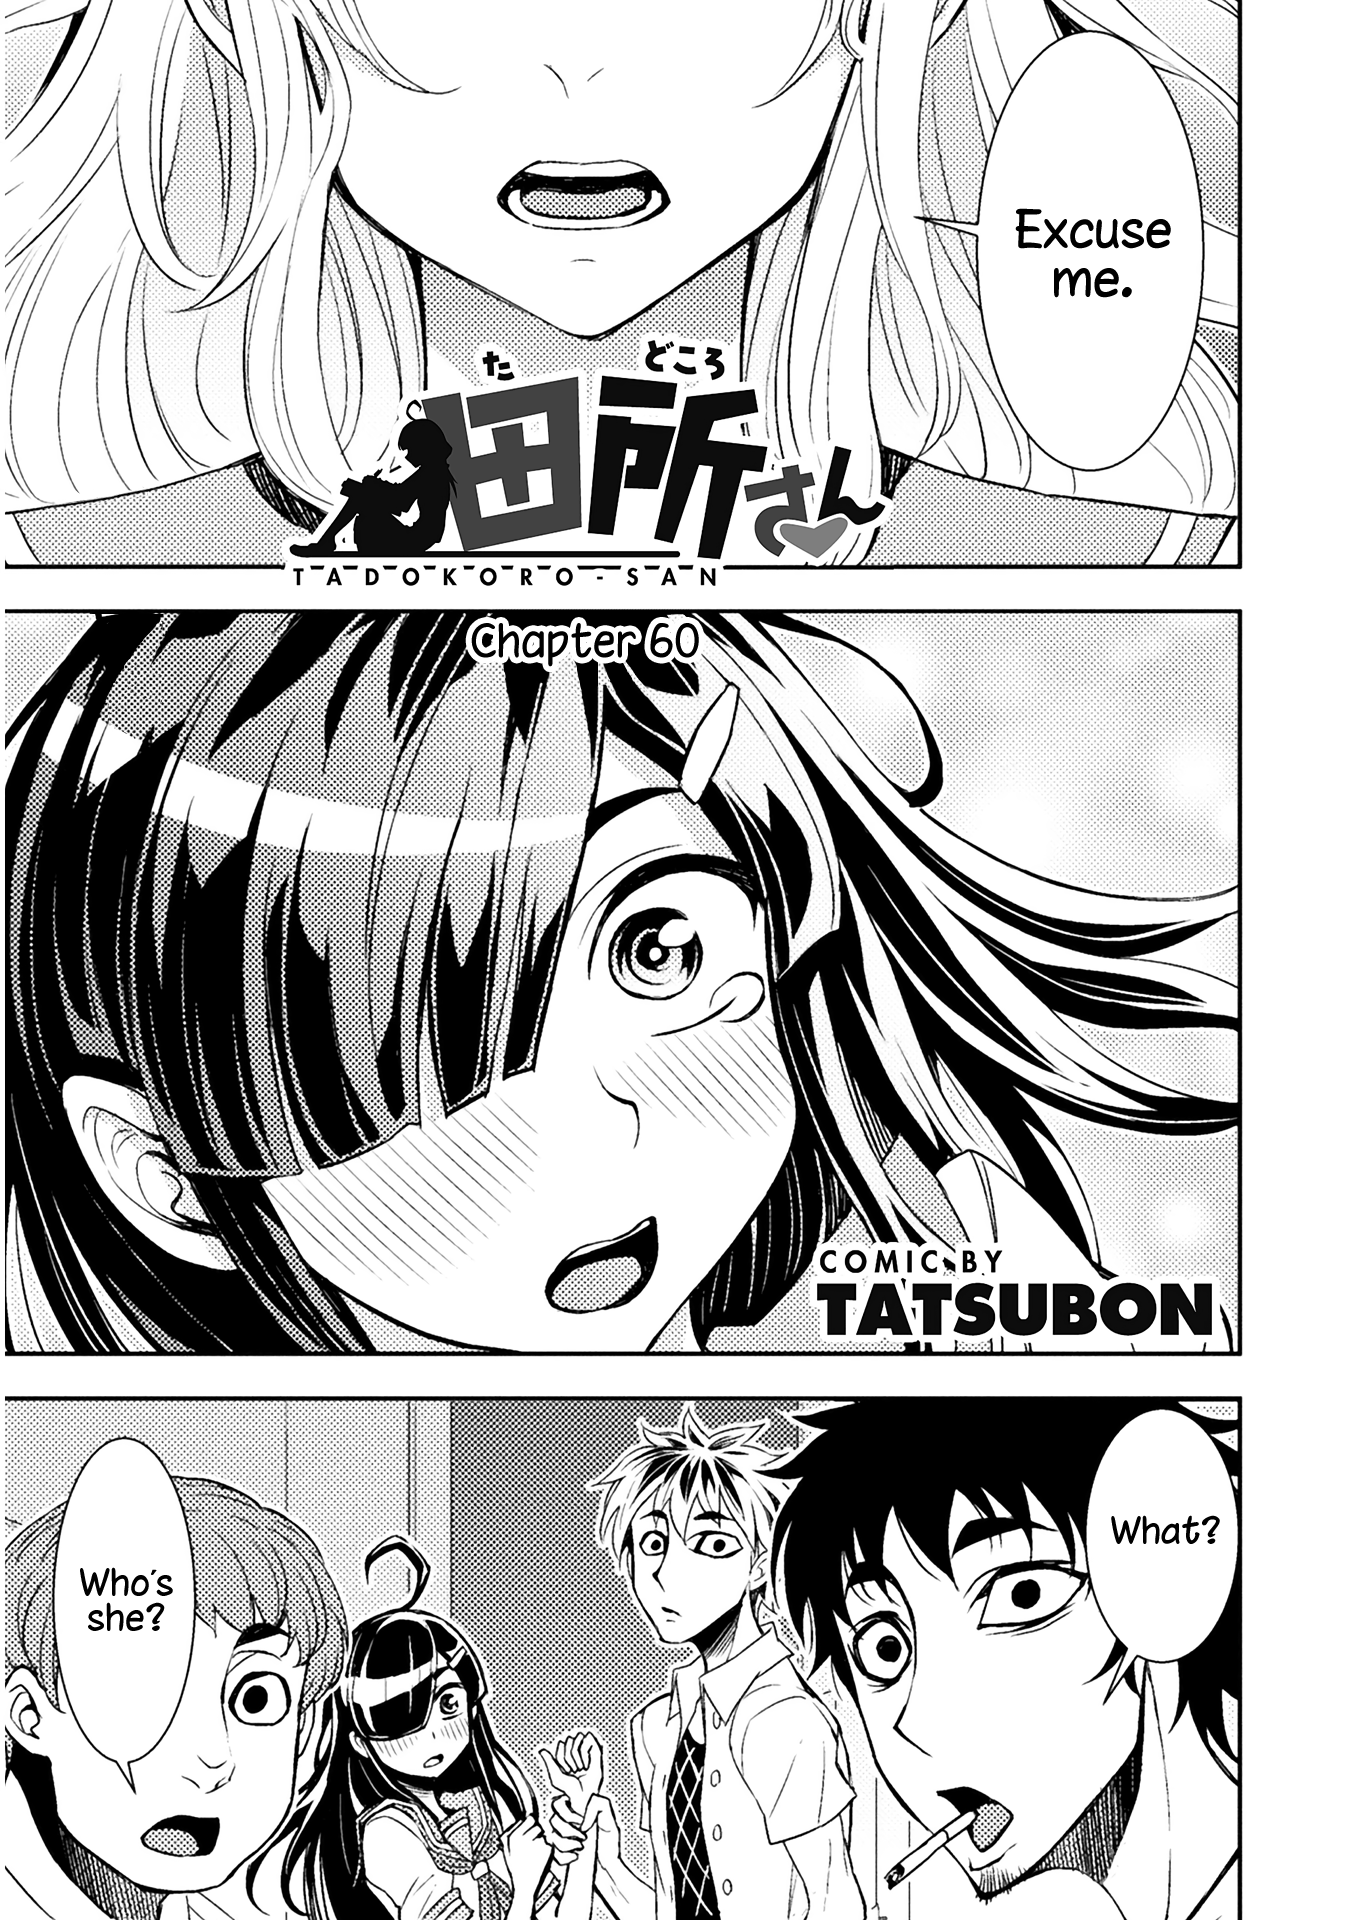 Tadokoro-San (Tatsubon) Chapter 60 #1